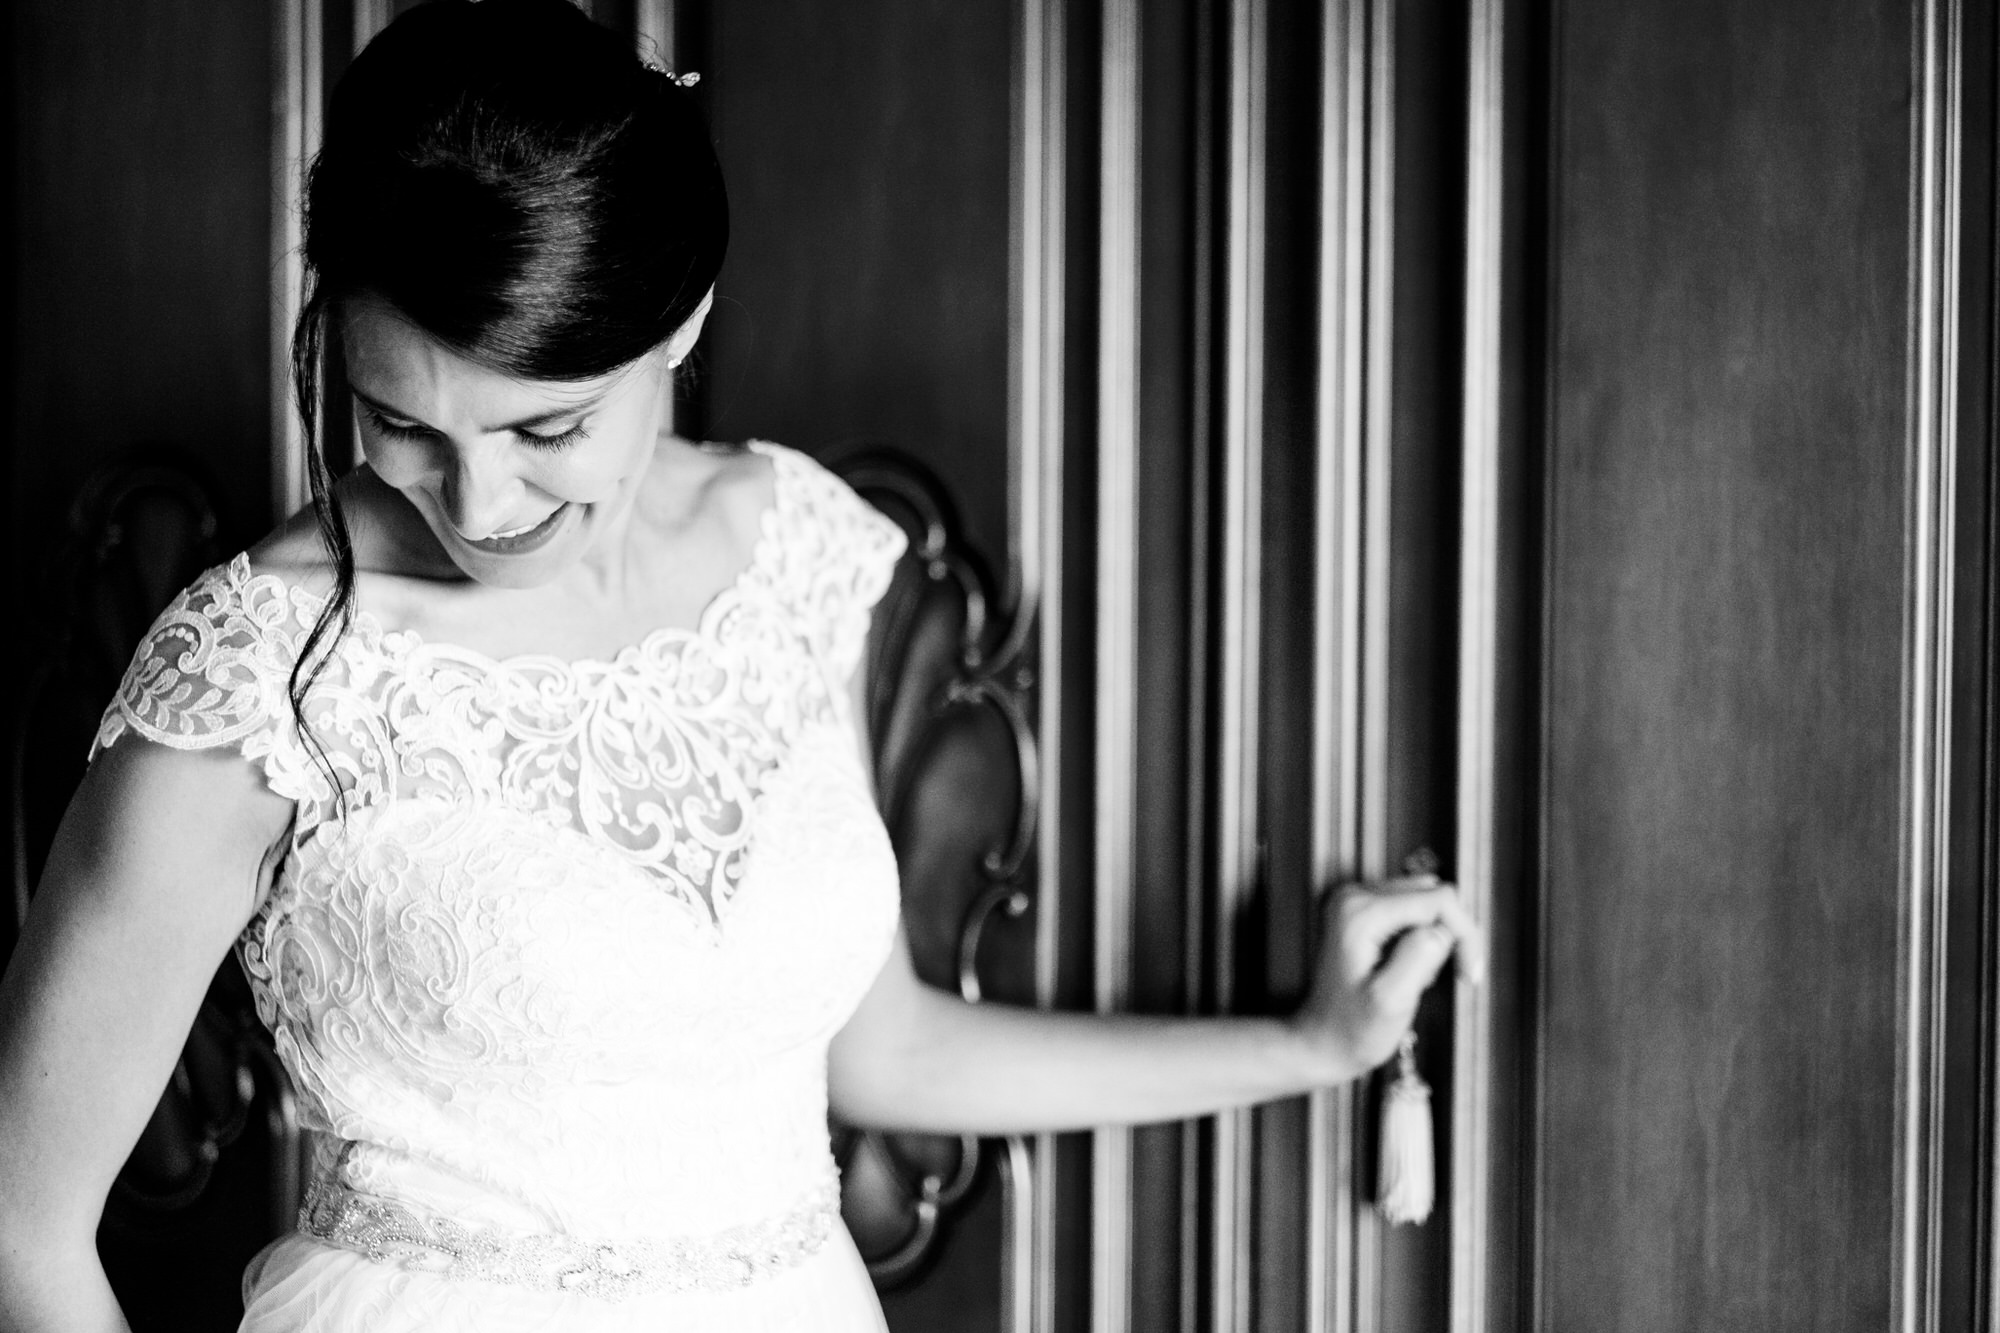 photography wedding reportage italy